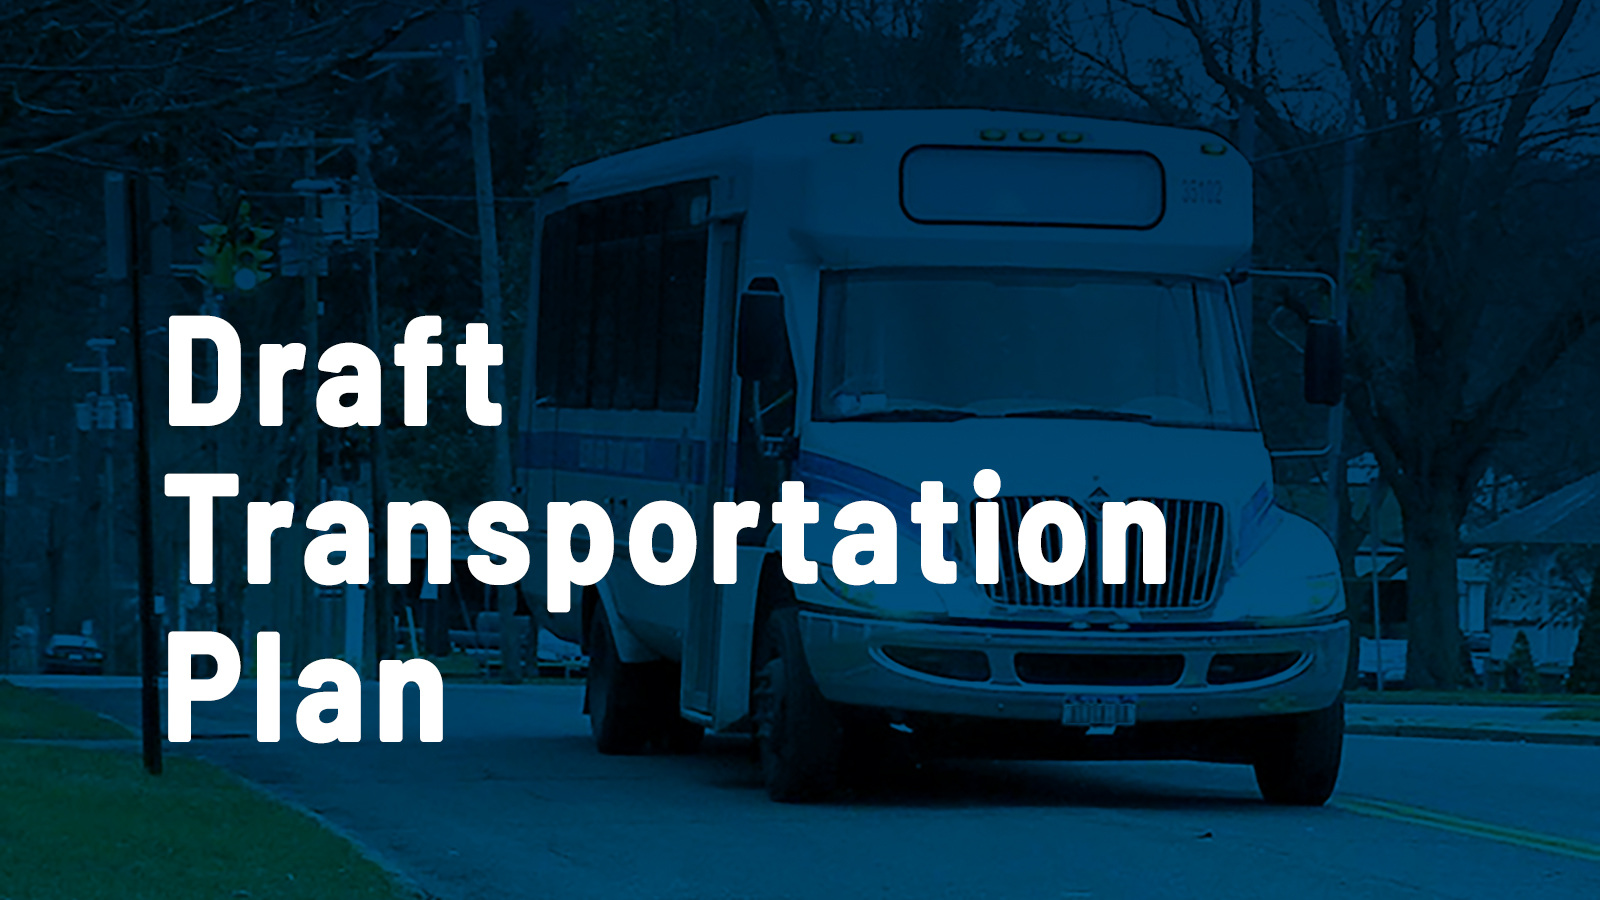 Draft Transportation Plan overlayed on photo of bus